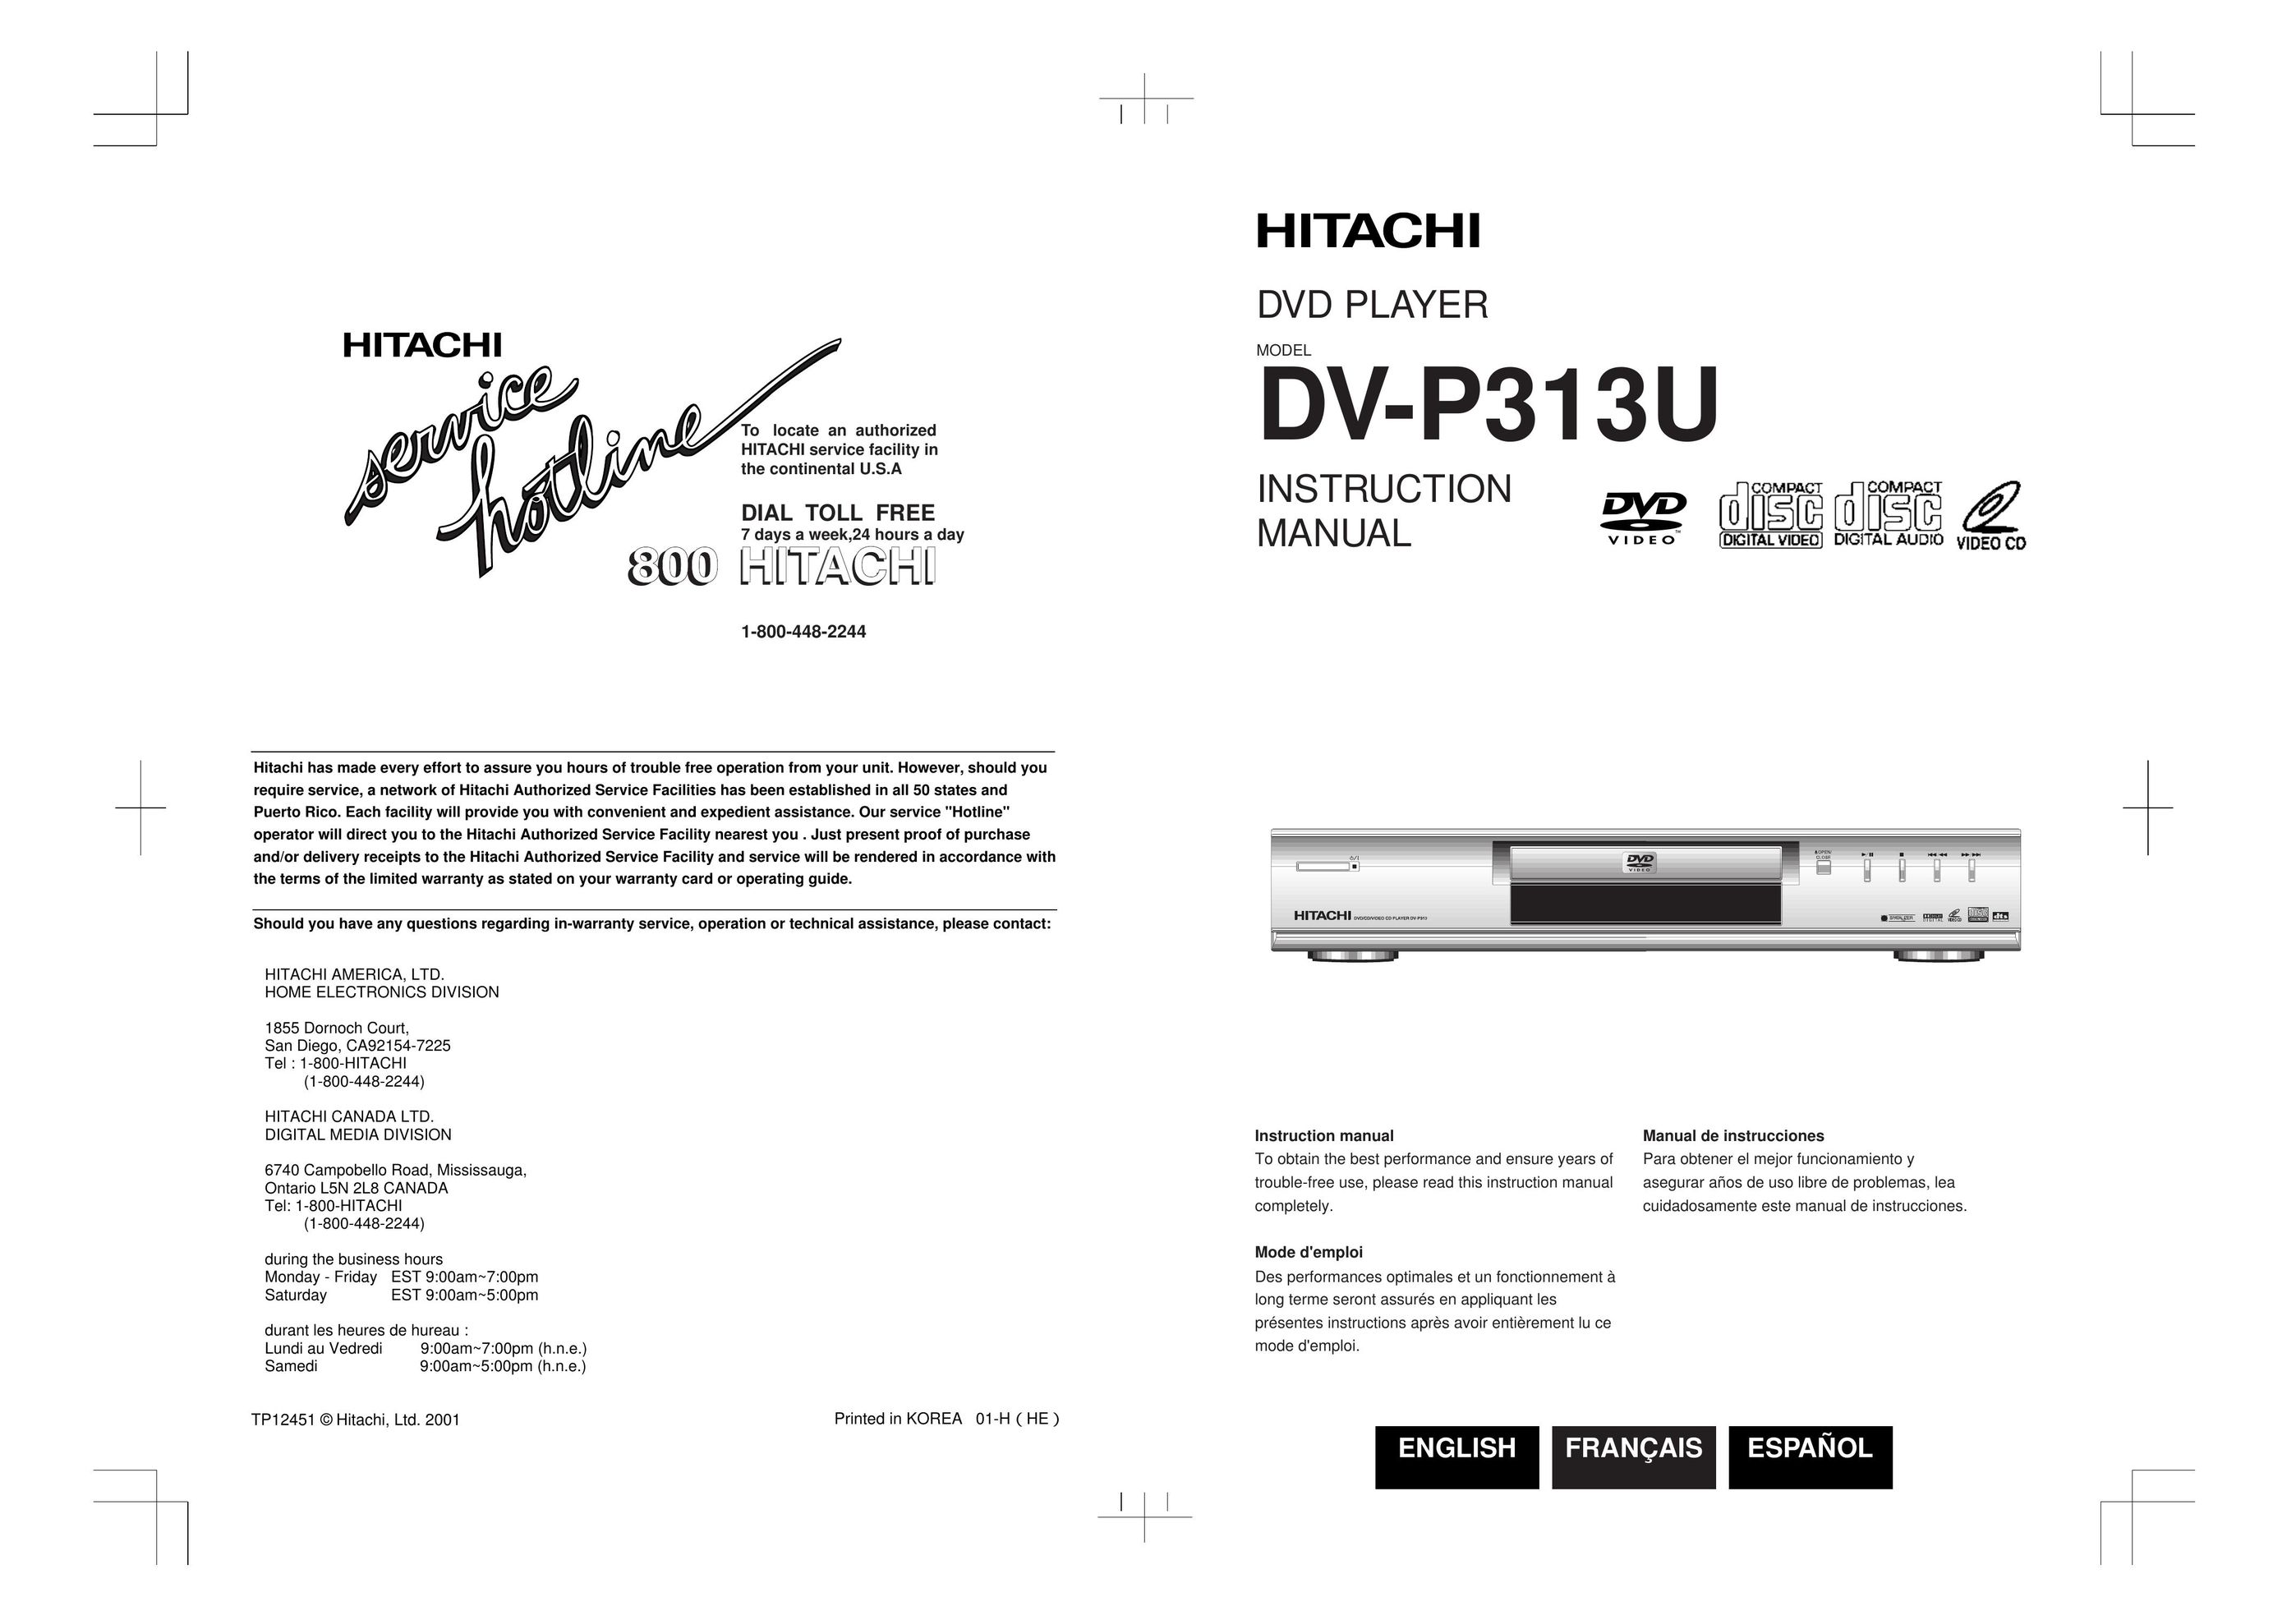 Hitachi DV-P313U DVD Player User Manual